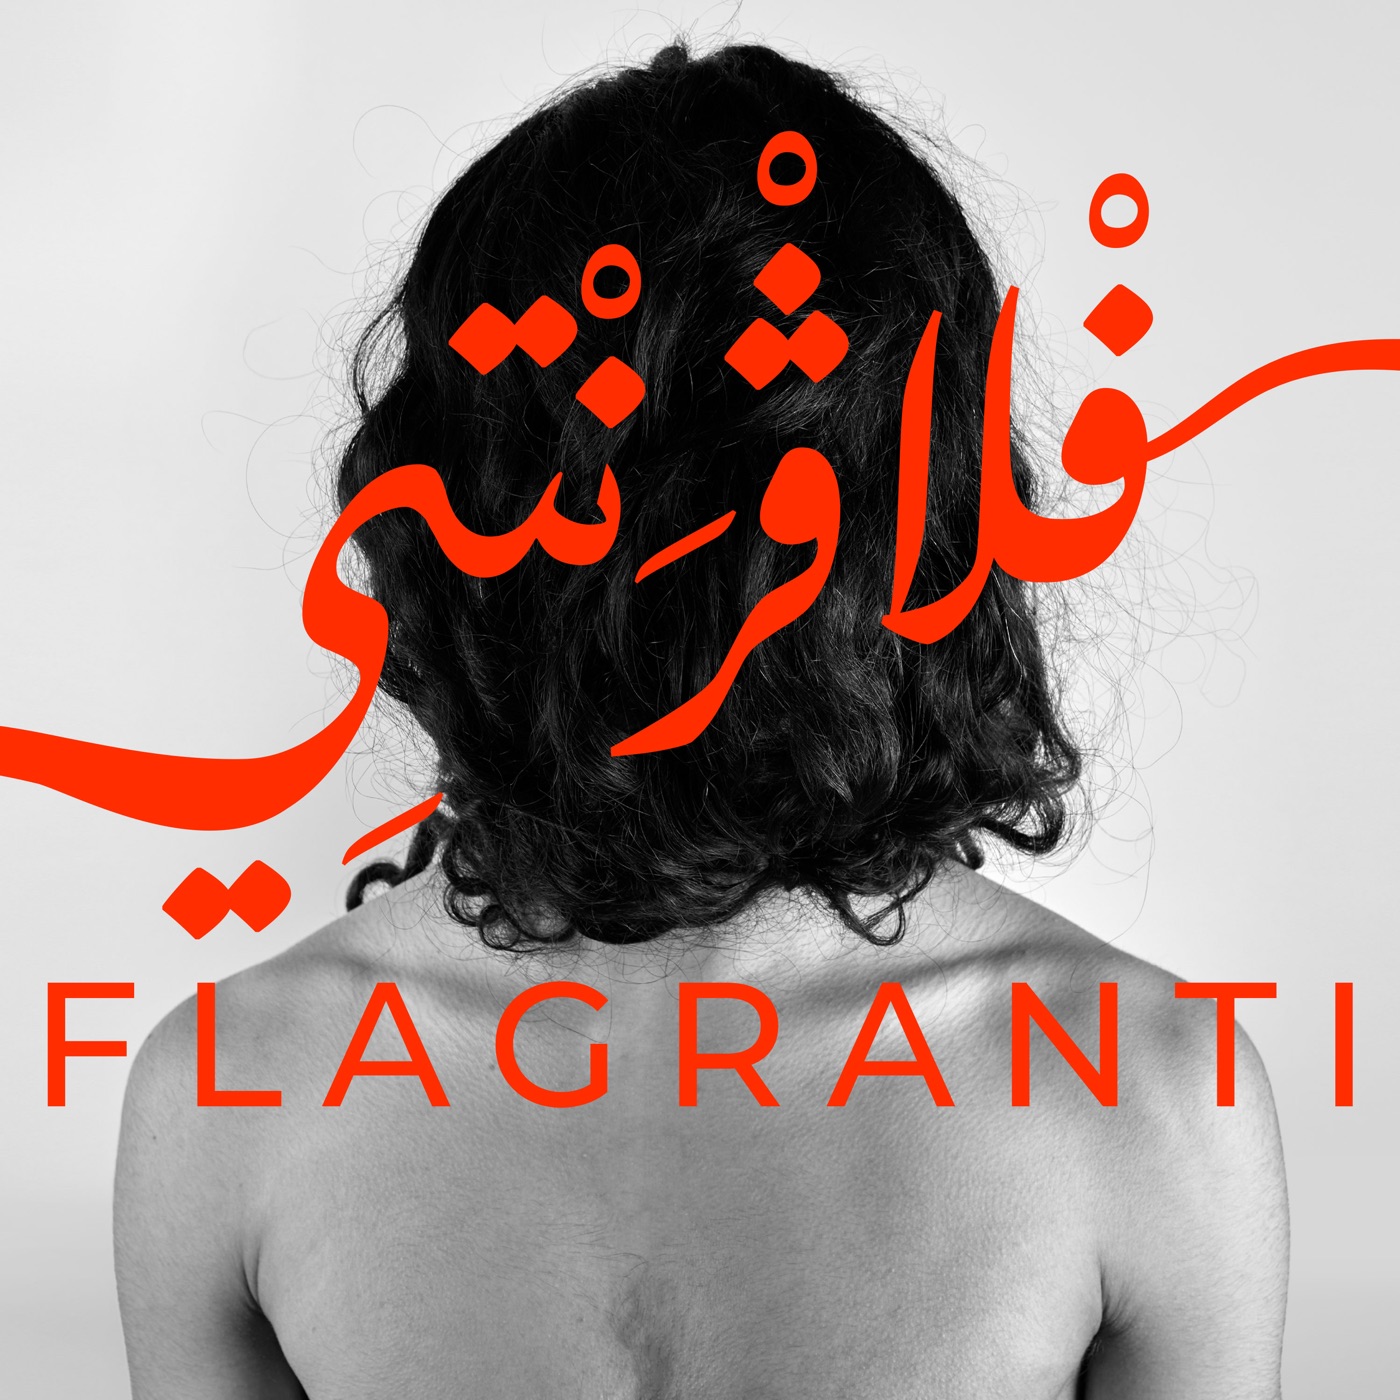 Flagranti by Deena Abdelwahed